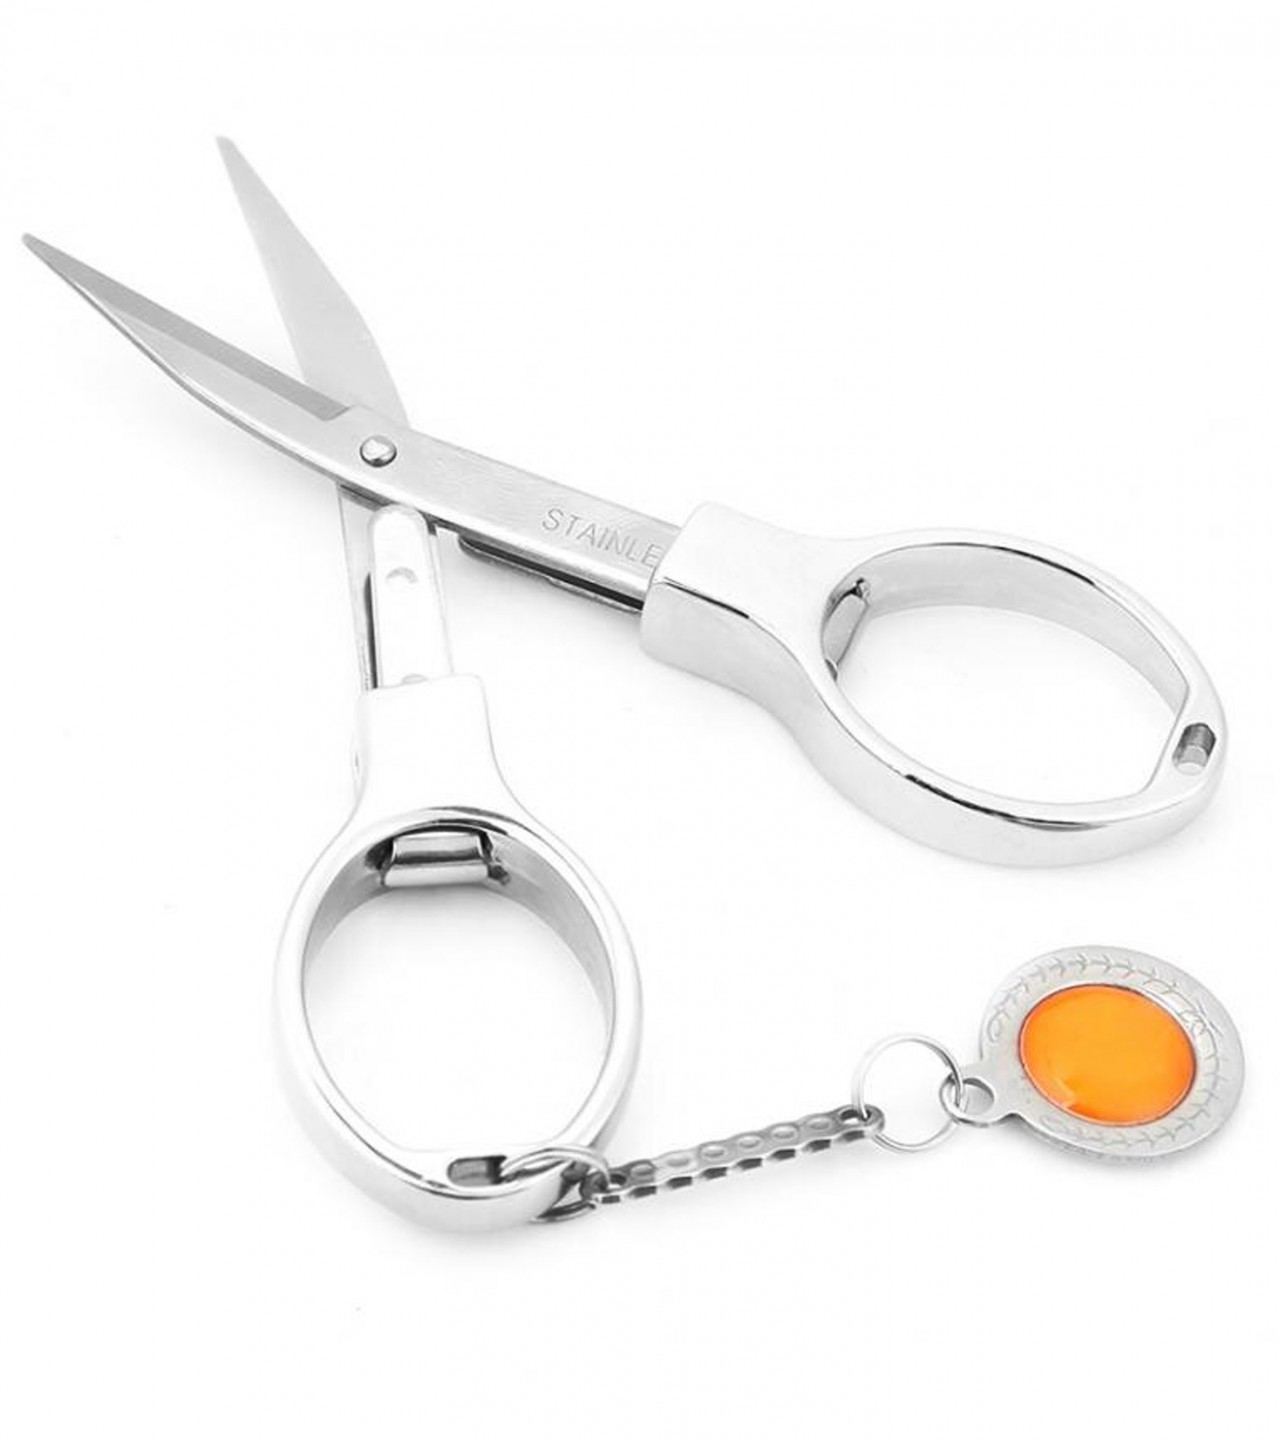 Mini Stainless Steel Folding Scissor with Key Chain - Silver